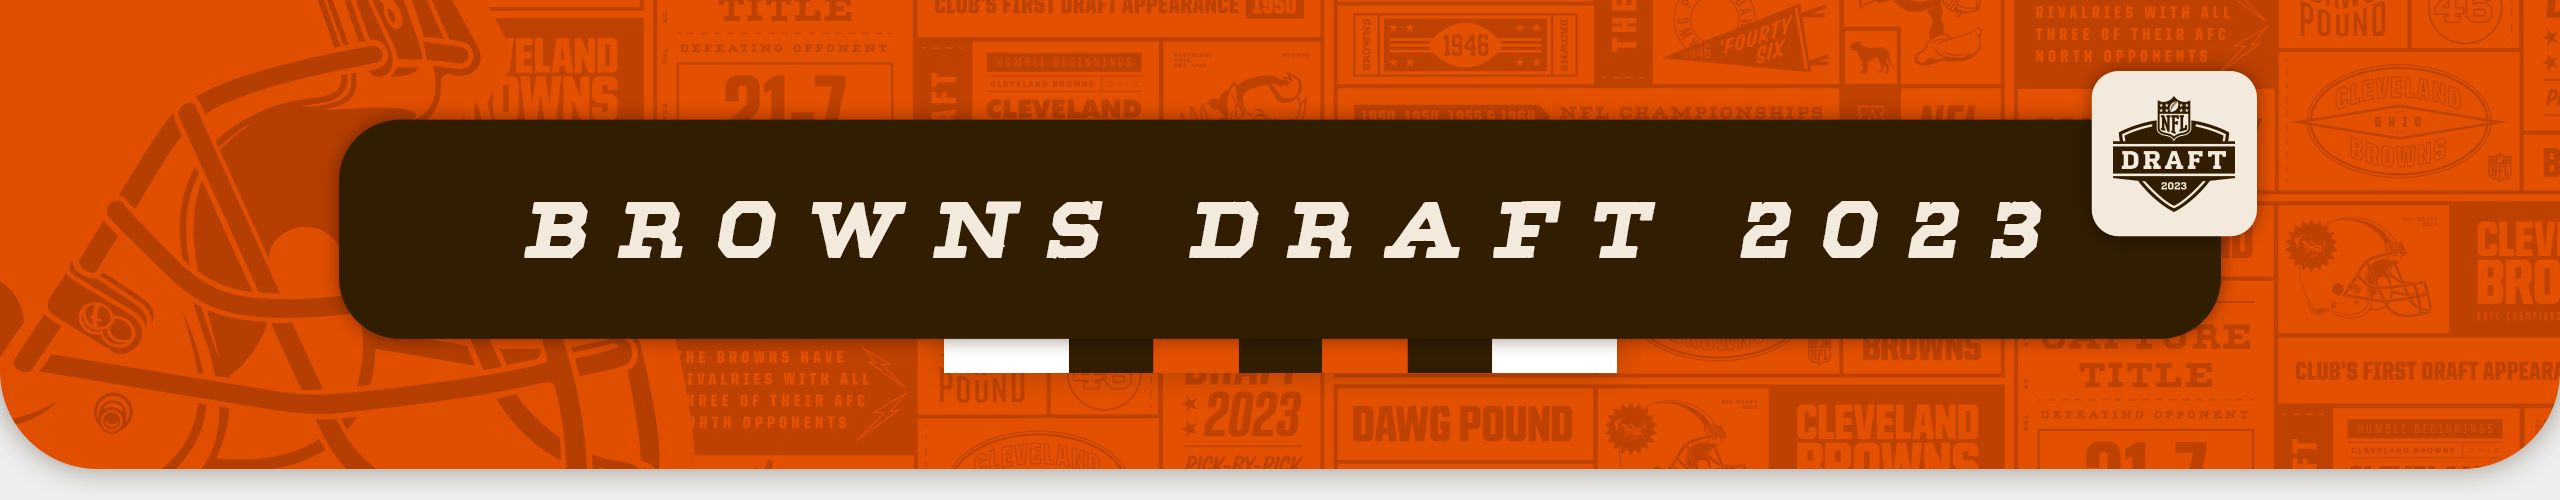 cleveland browns mock draft 2023